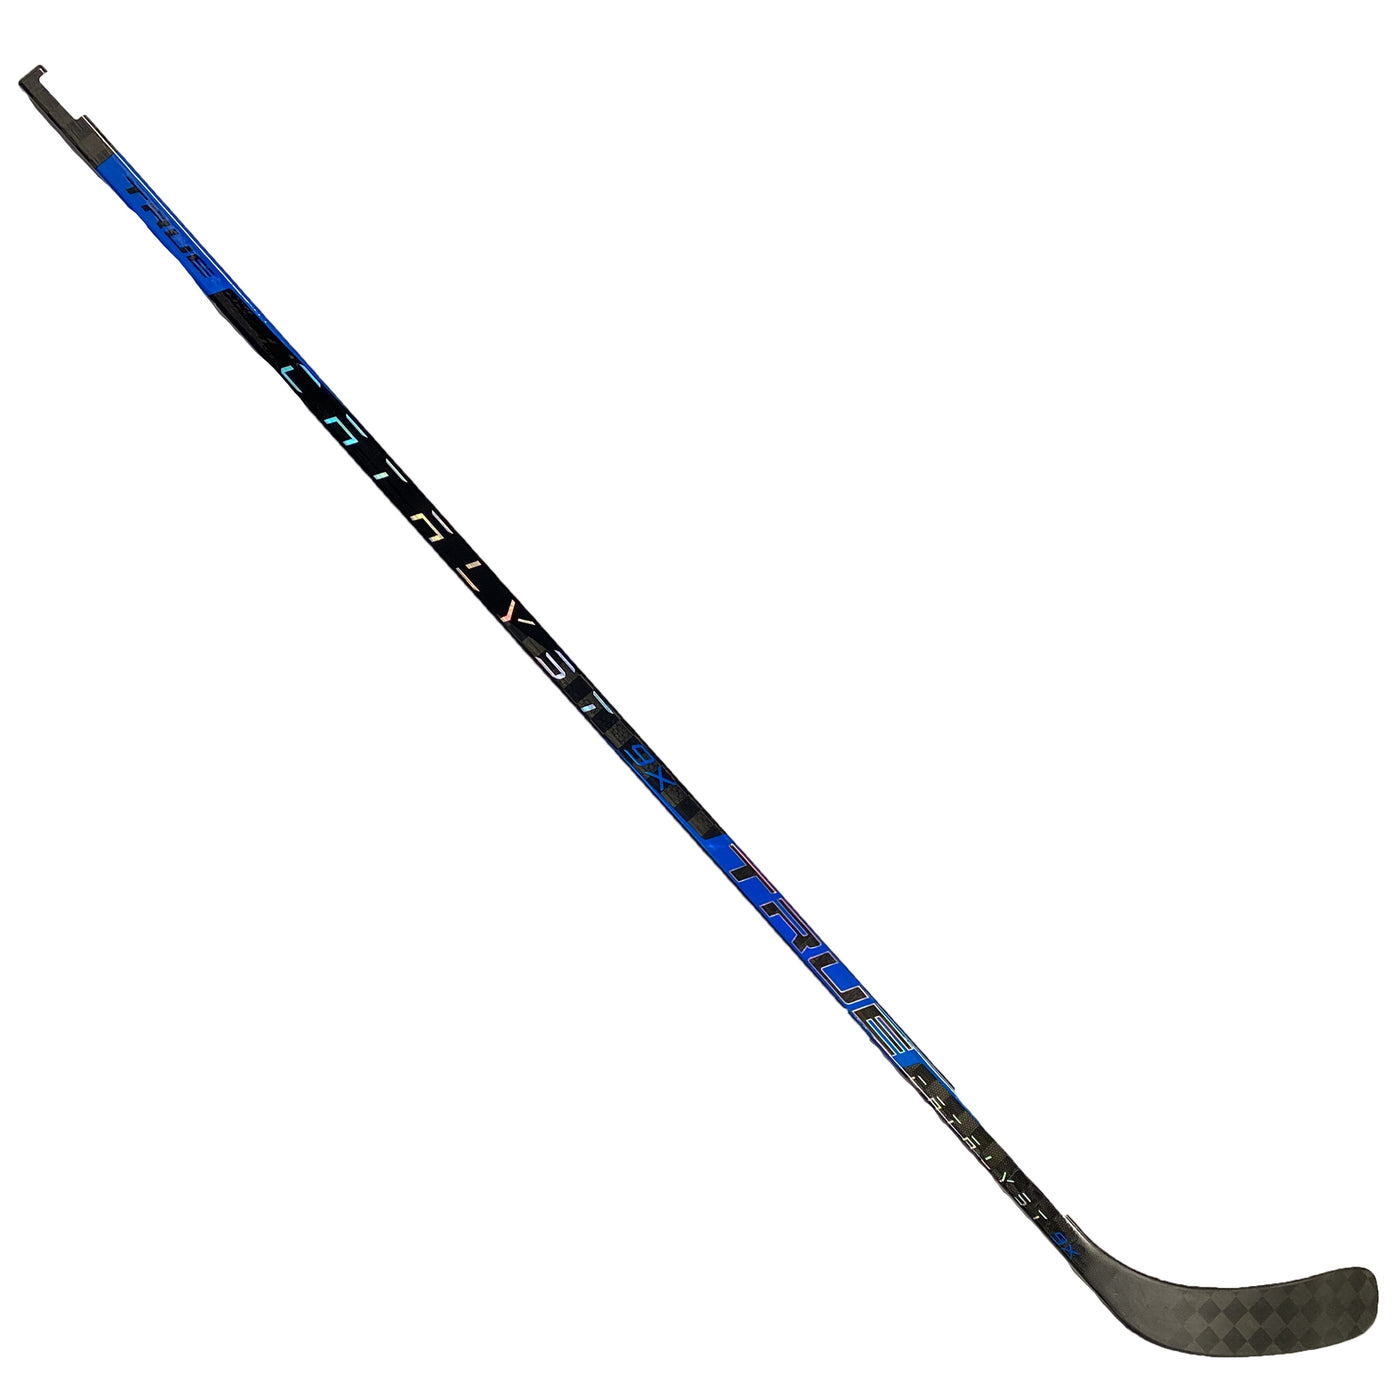 True Catalyst 9X - Pro Stock Hockey Stick - CALE MAKAR